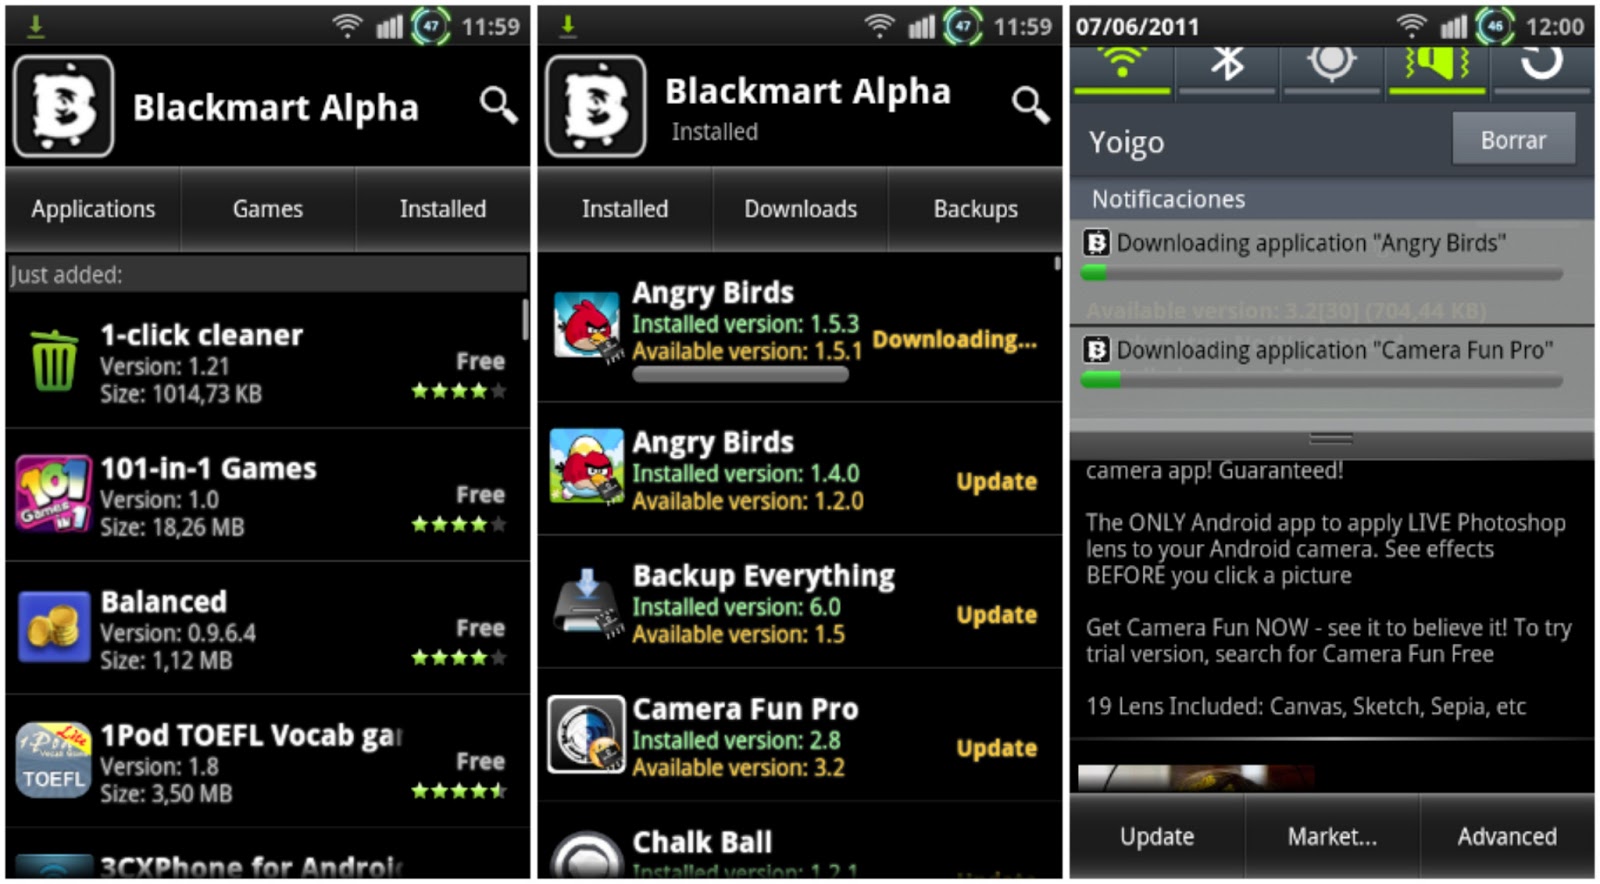 Blackmart Alpha 0.49.93 Apk | Android Apps Download